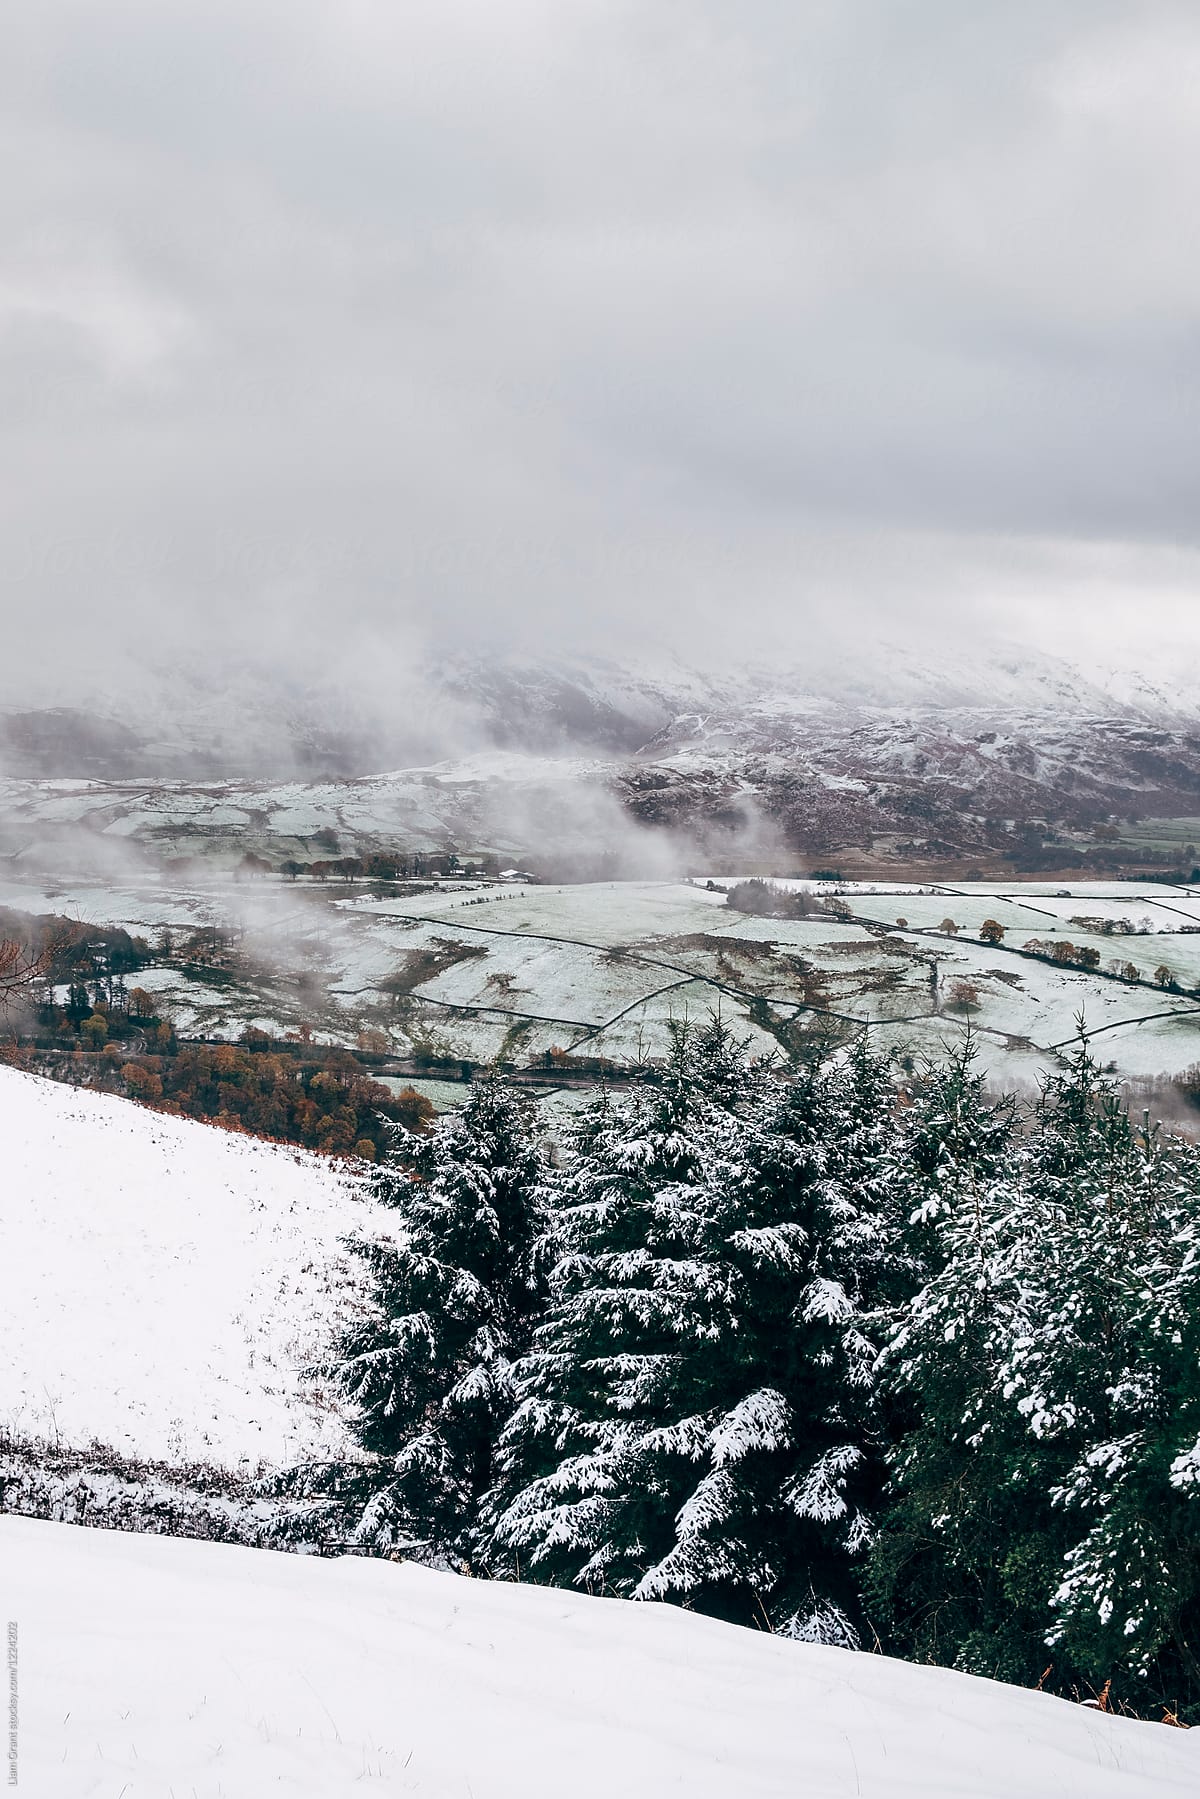 Snow covered views from Latrigg, Cumbria, UK.